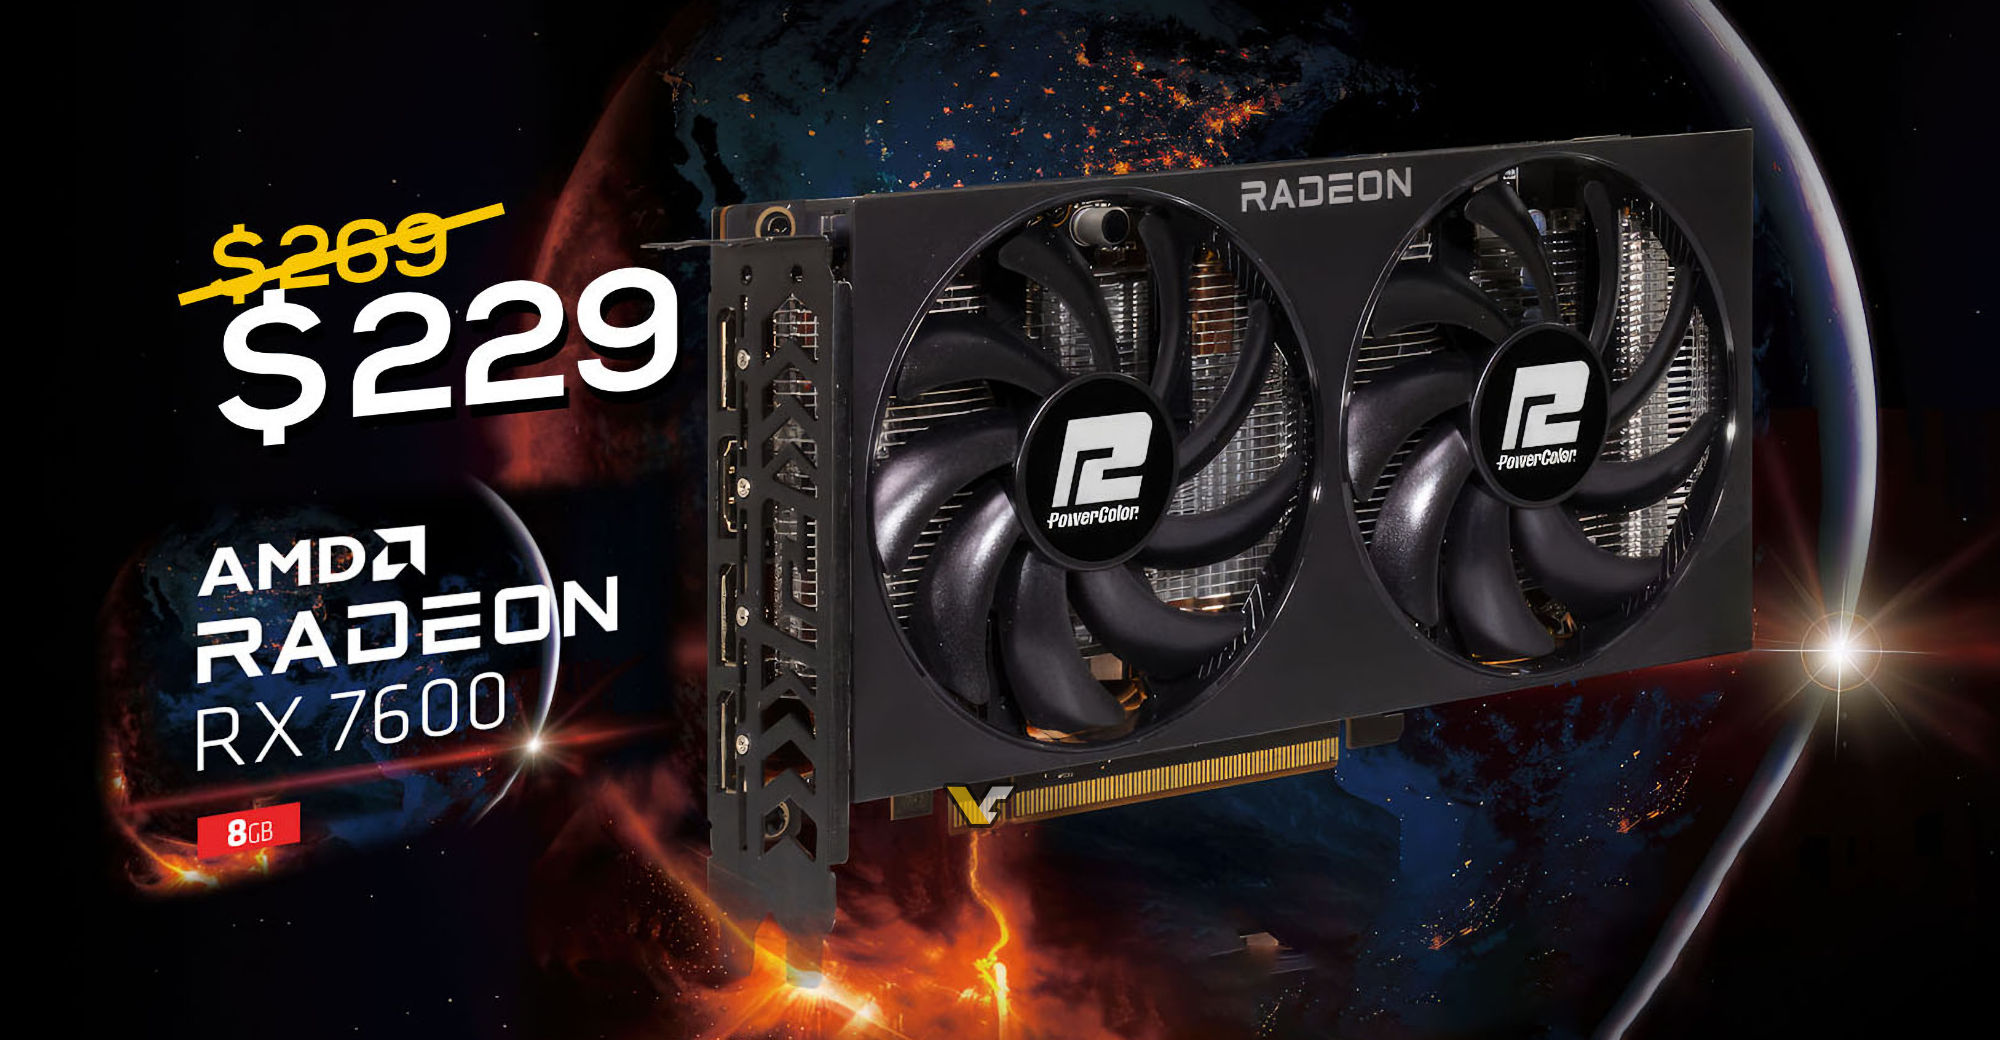 AMD Radeon RX 6650 XT To Be Discontinued Soon, GPU Price Drops Below $240 US